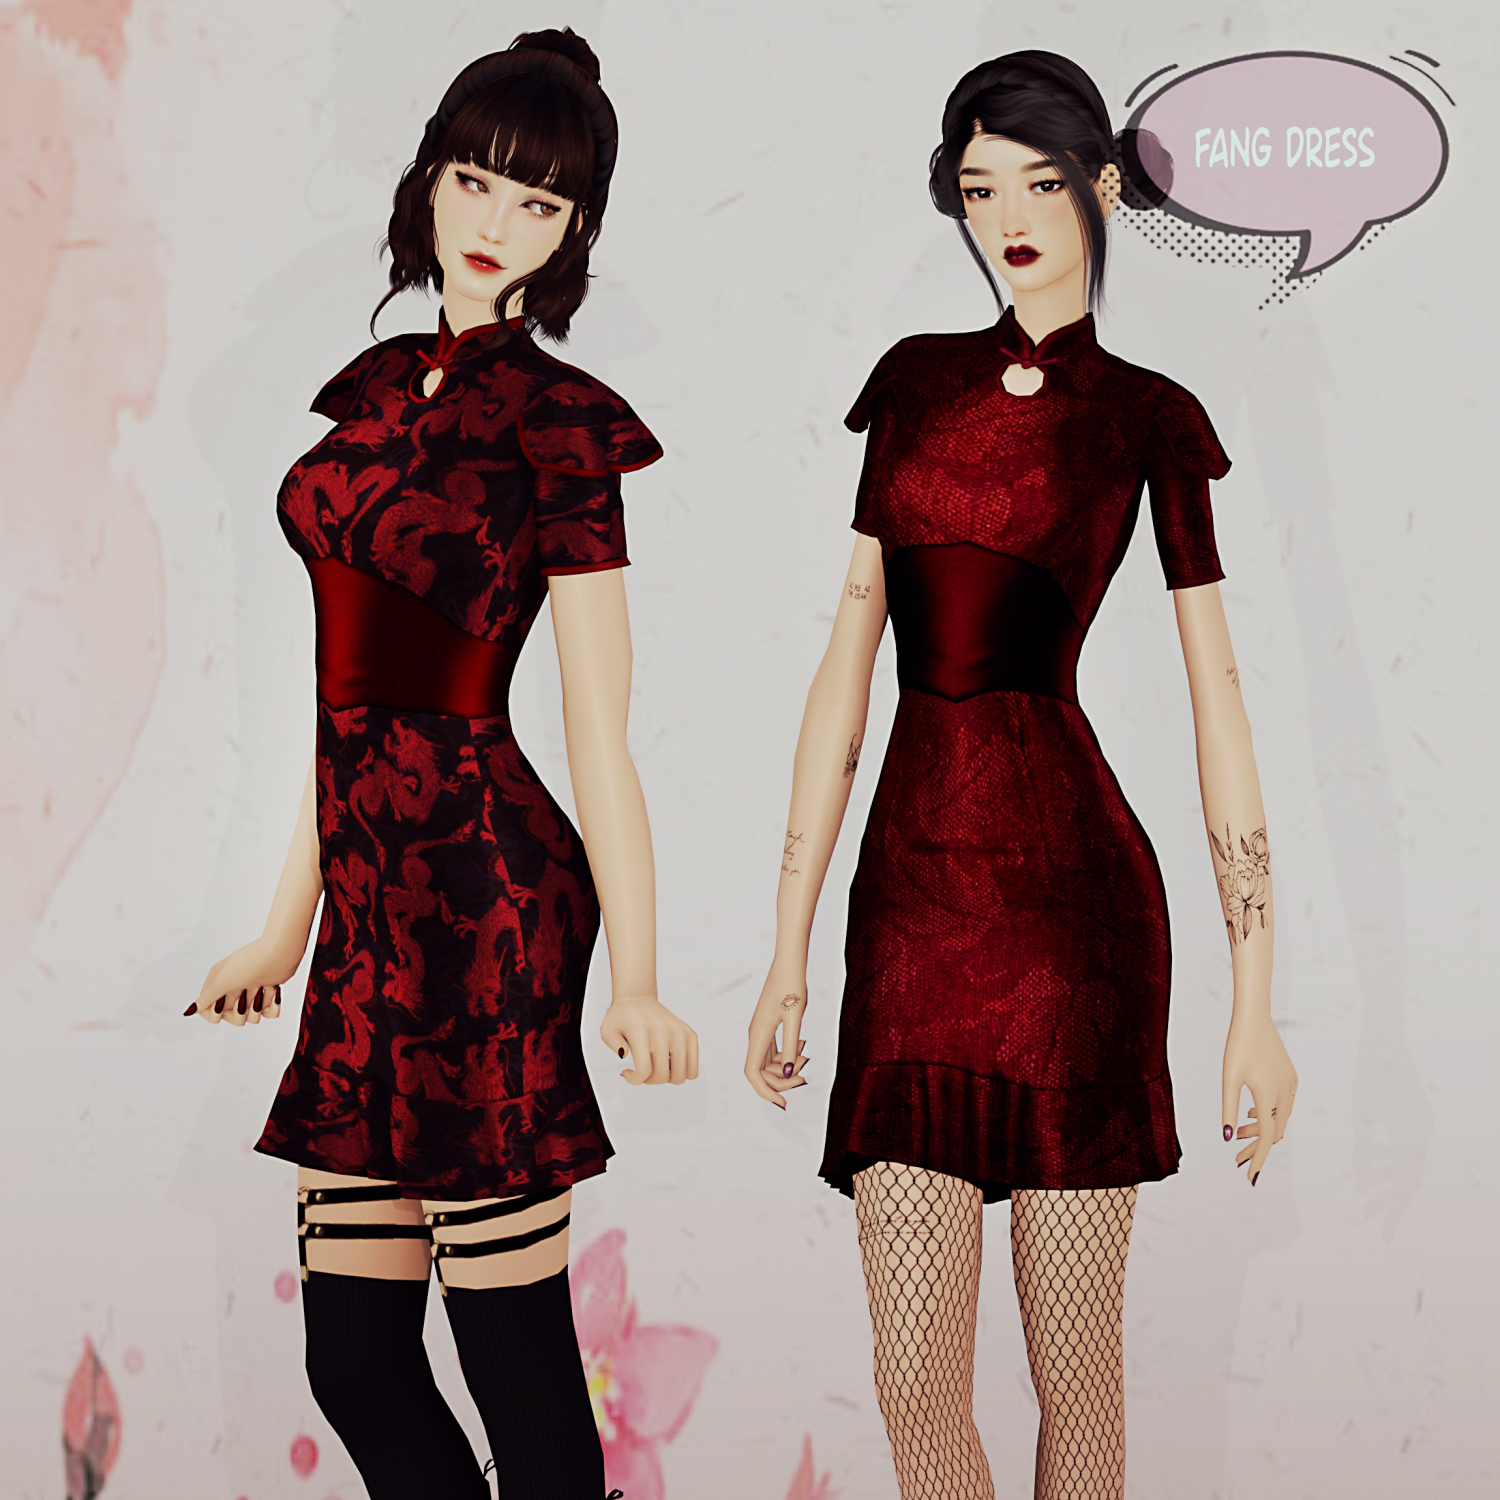 Fang dress - The Sims 4 Catalog